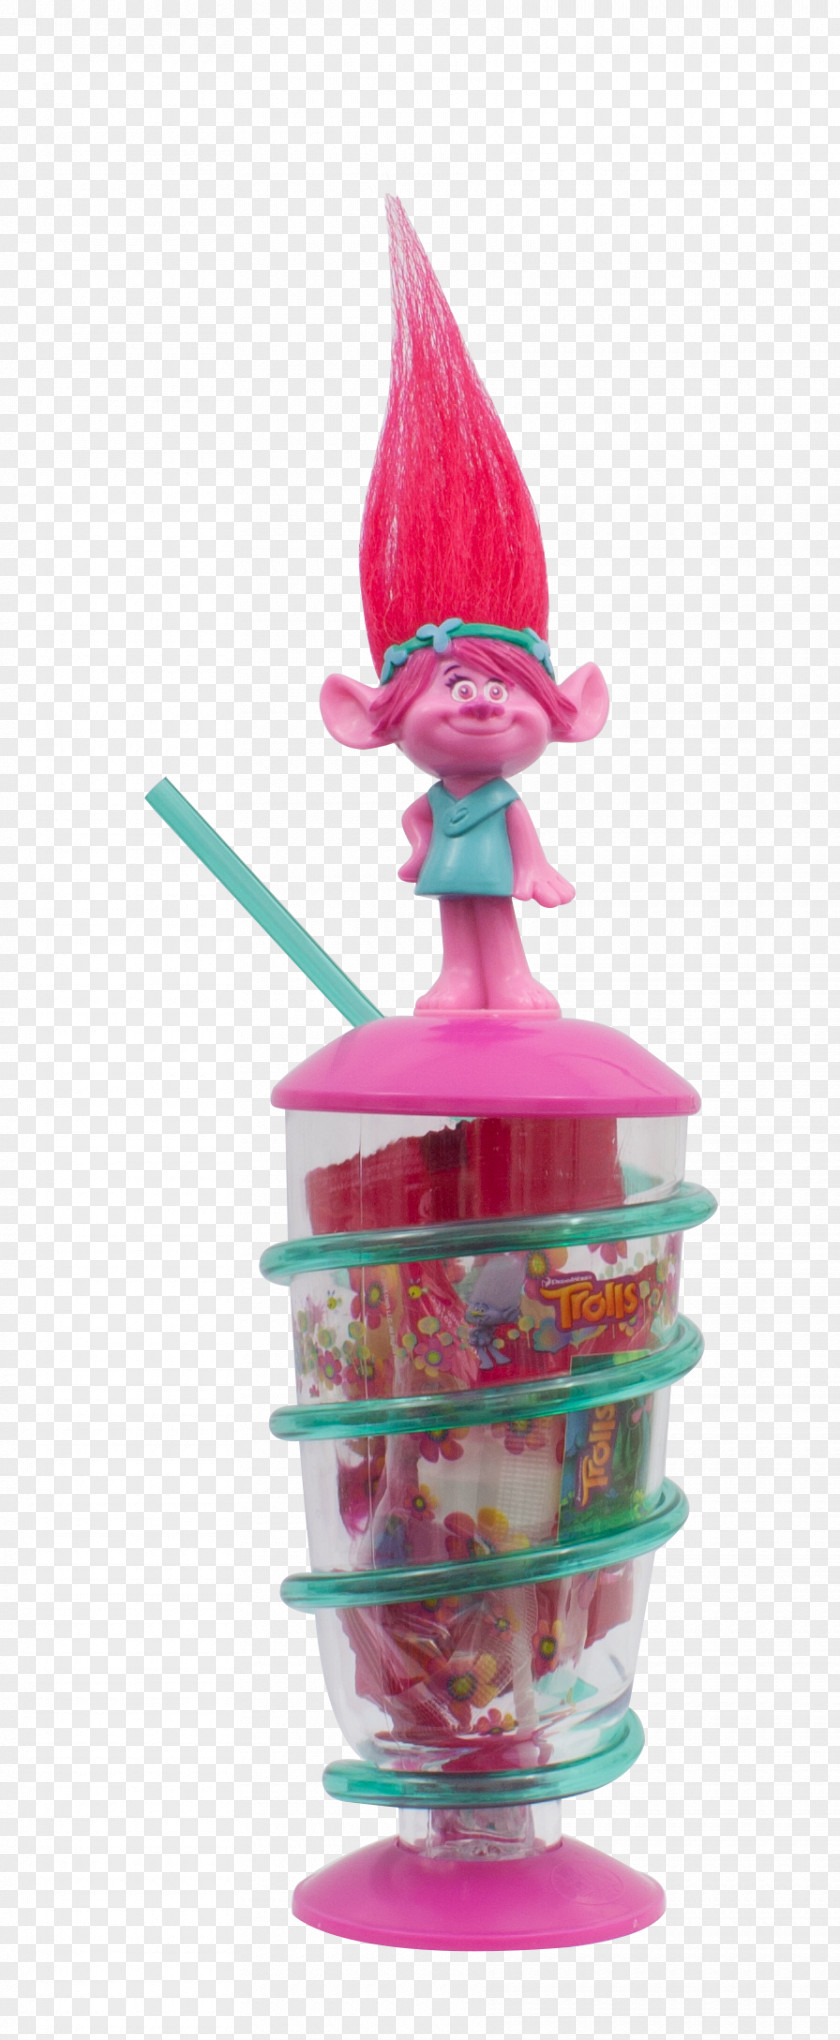 Candy Stick Bonbon Lollipop Trolls PNG